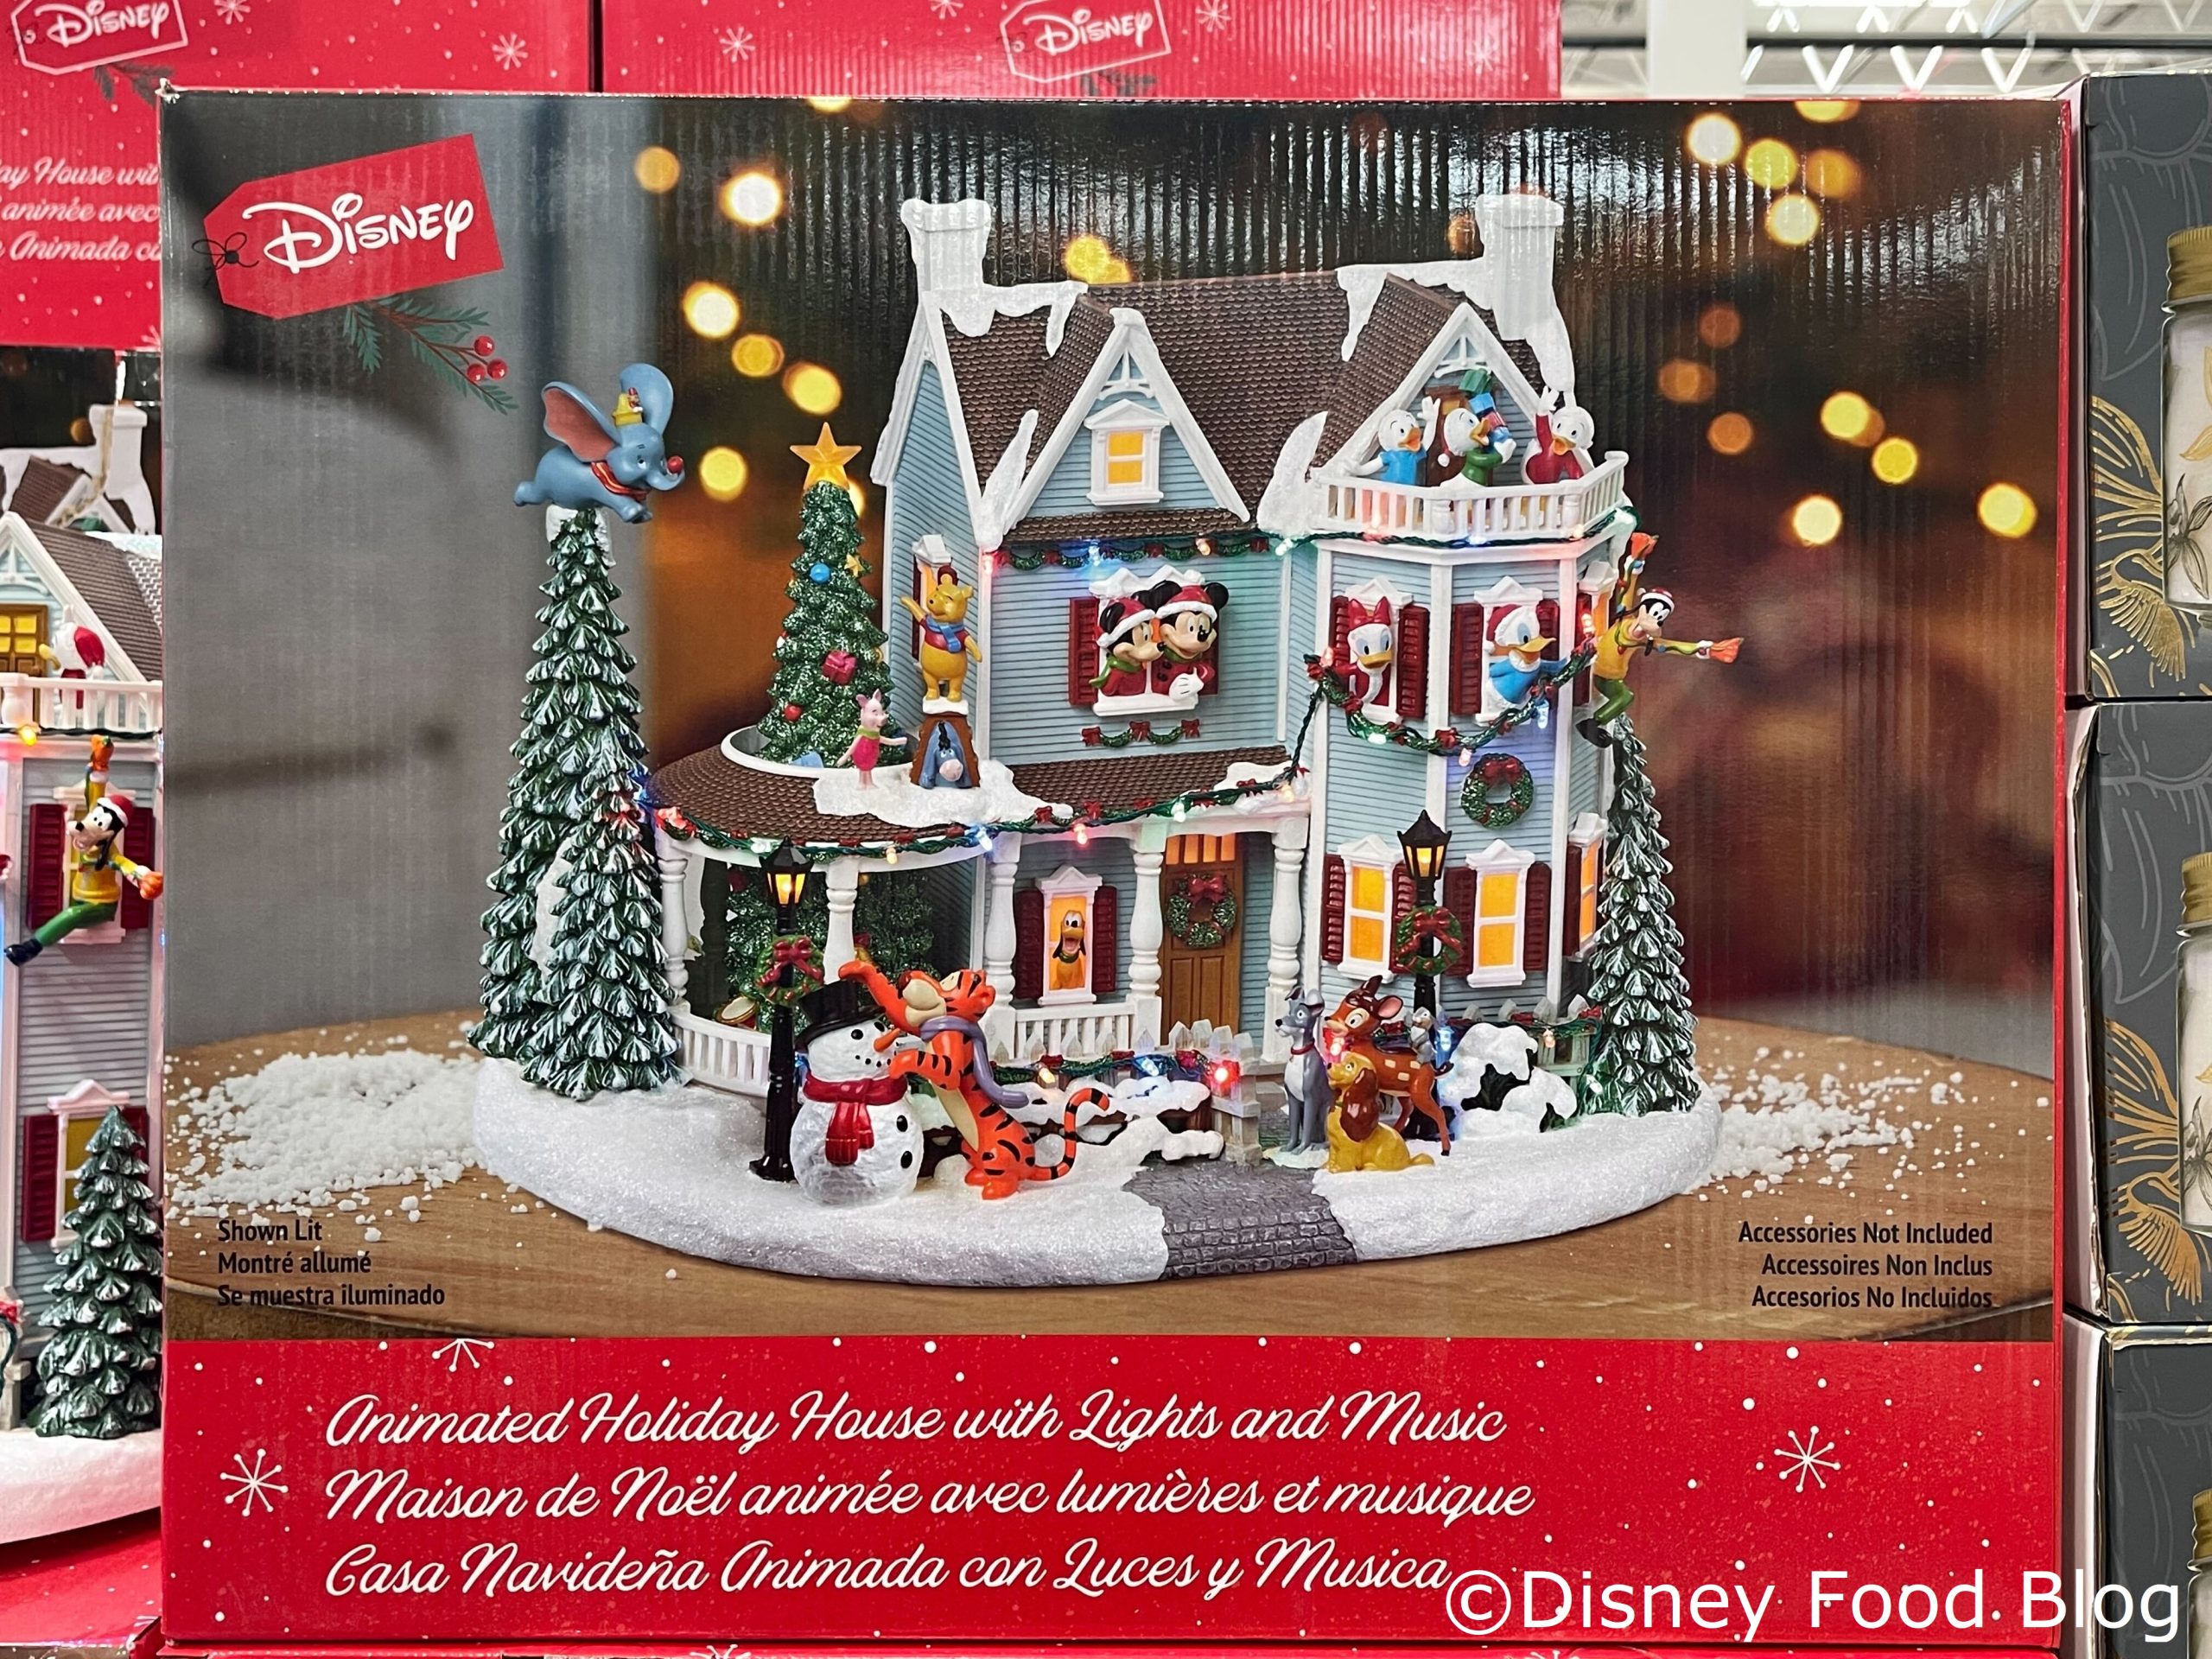 Disney animated Holiday house with lights and music. - ayanawebzine.com